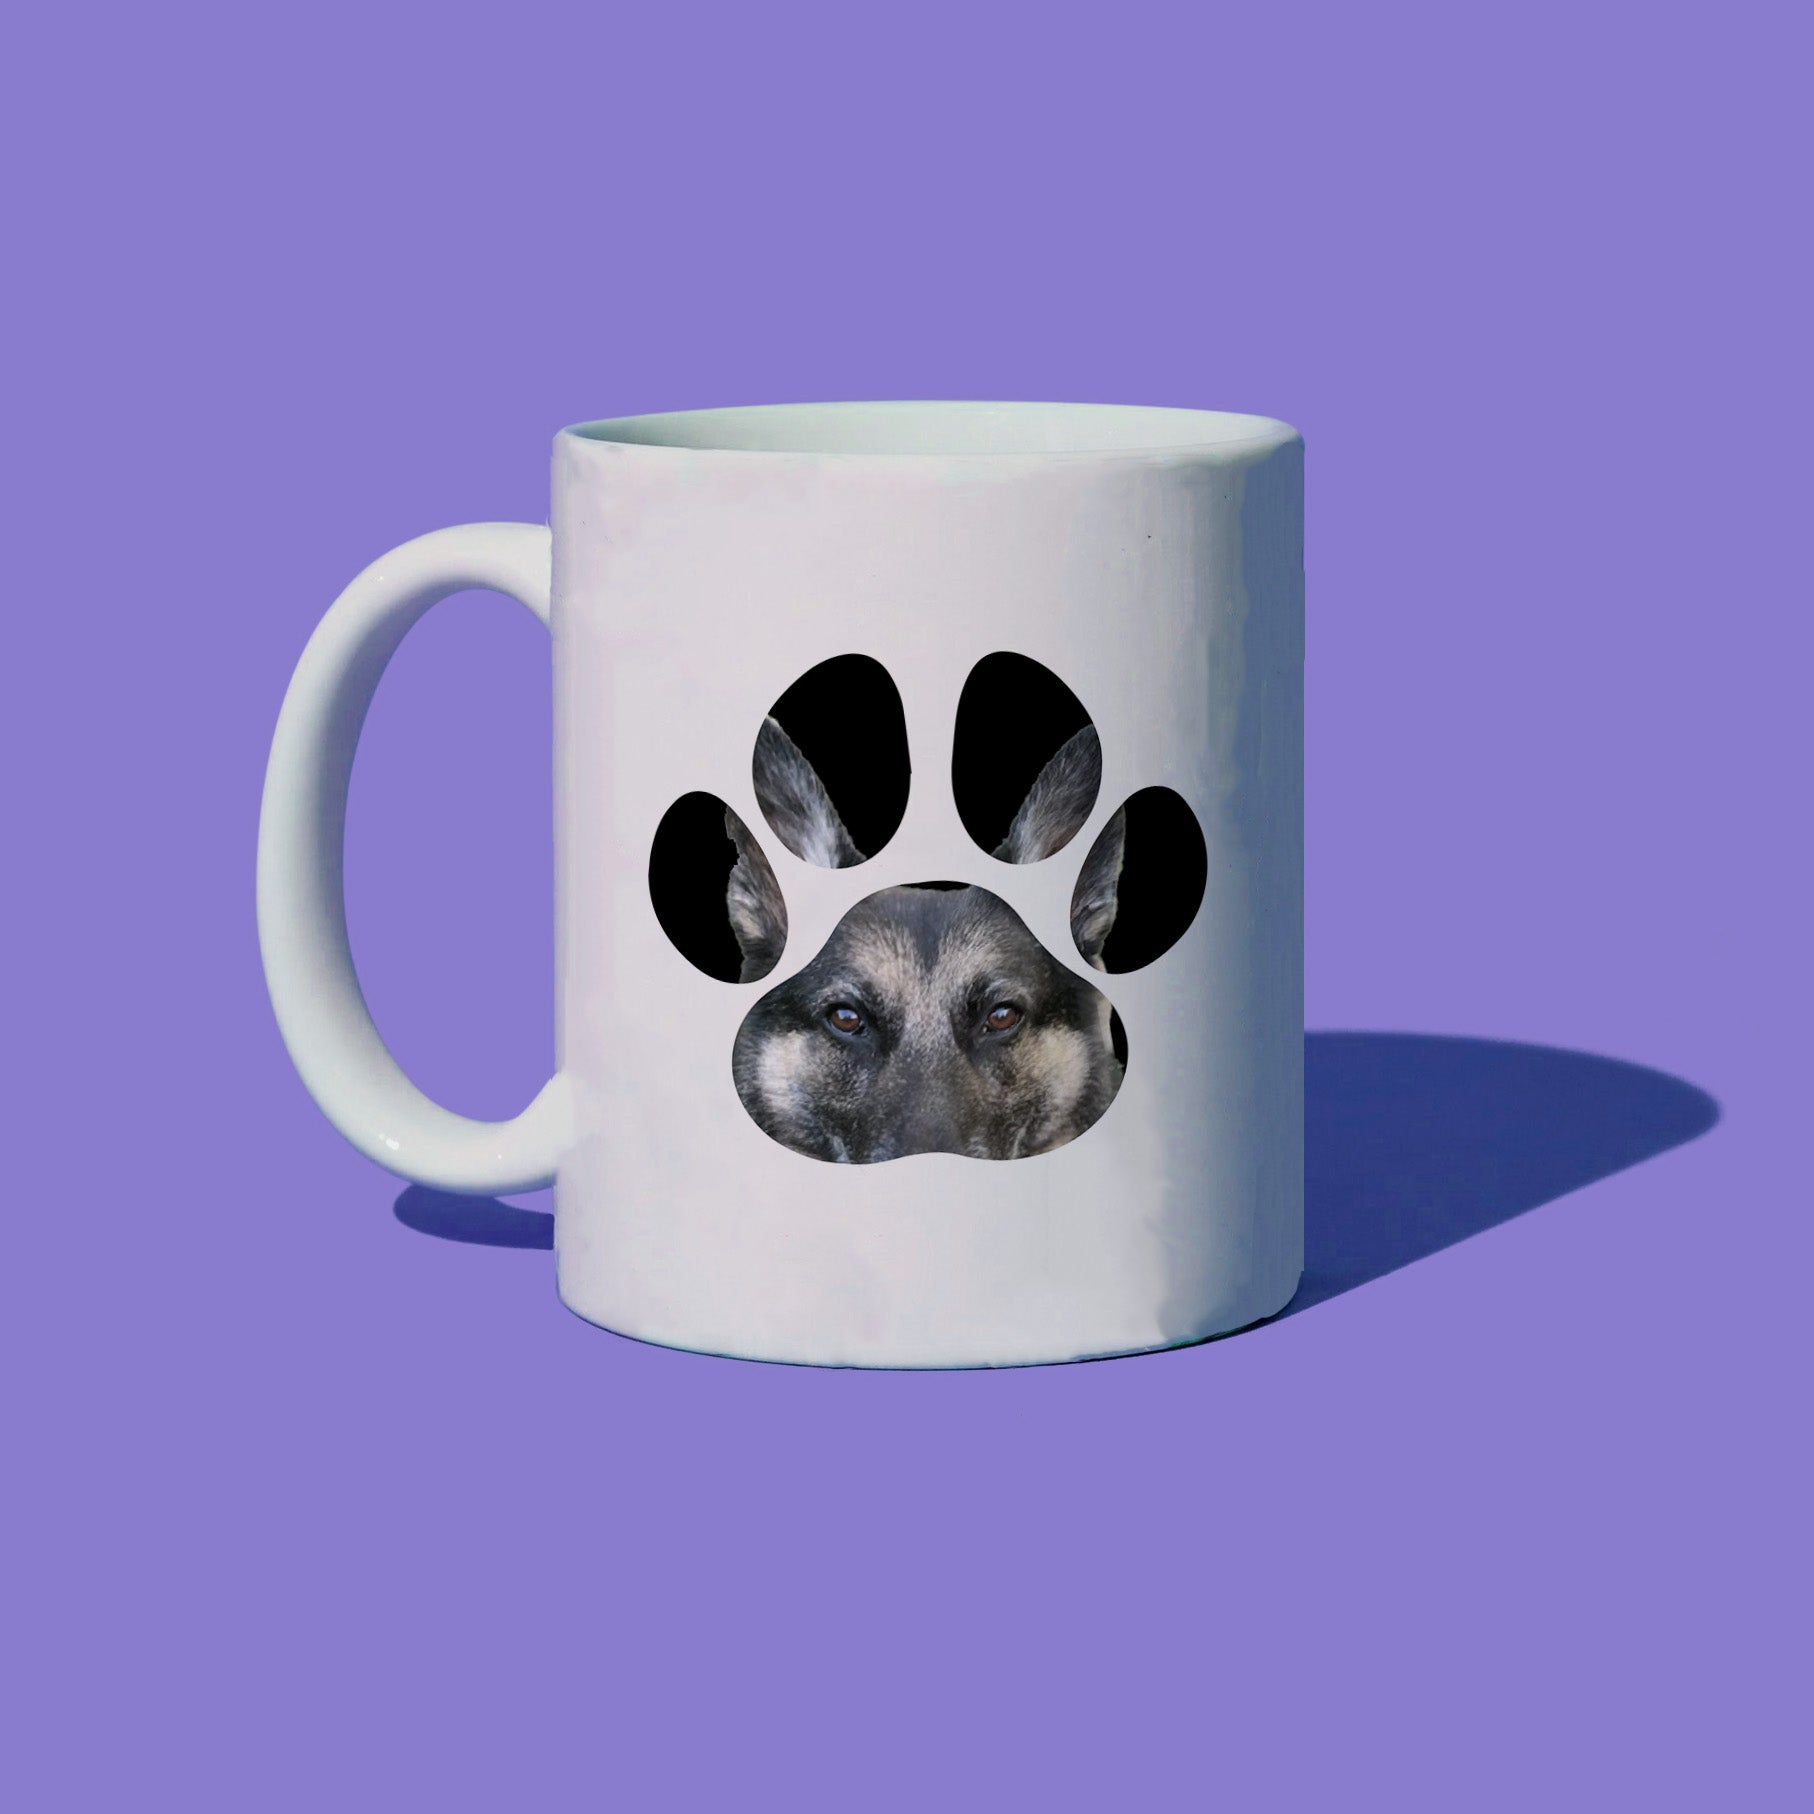 paw-one-mug.jpg